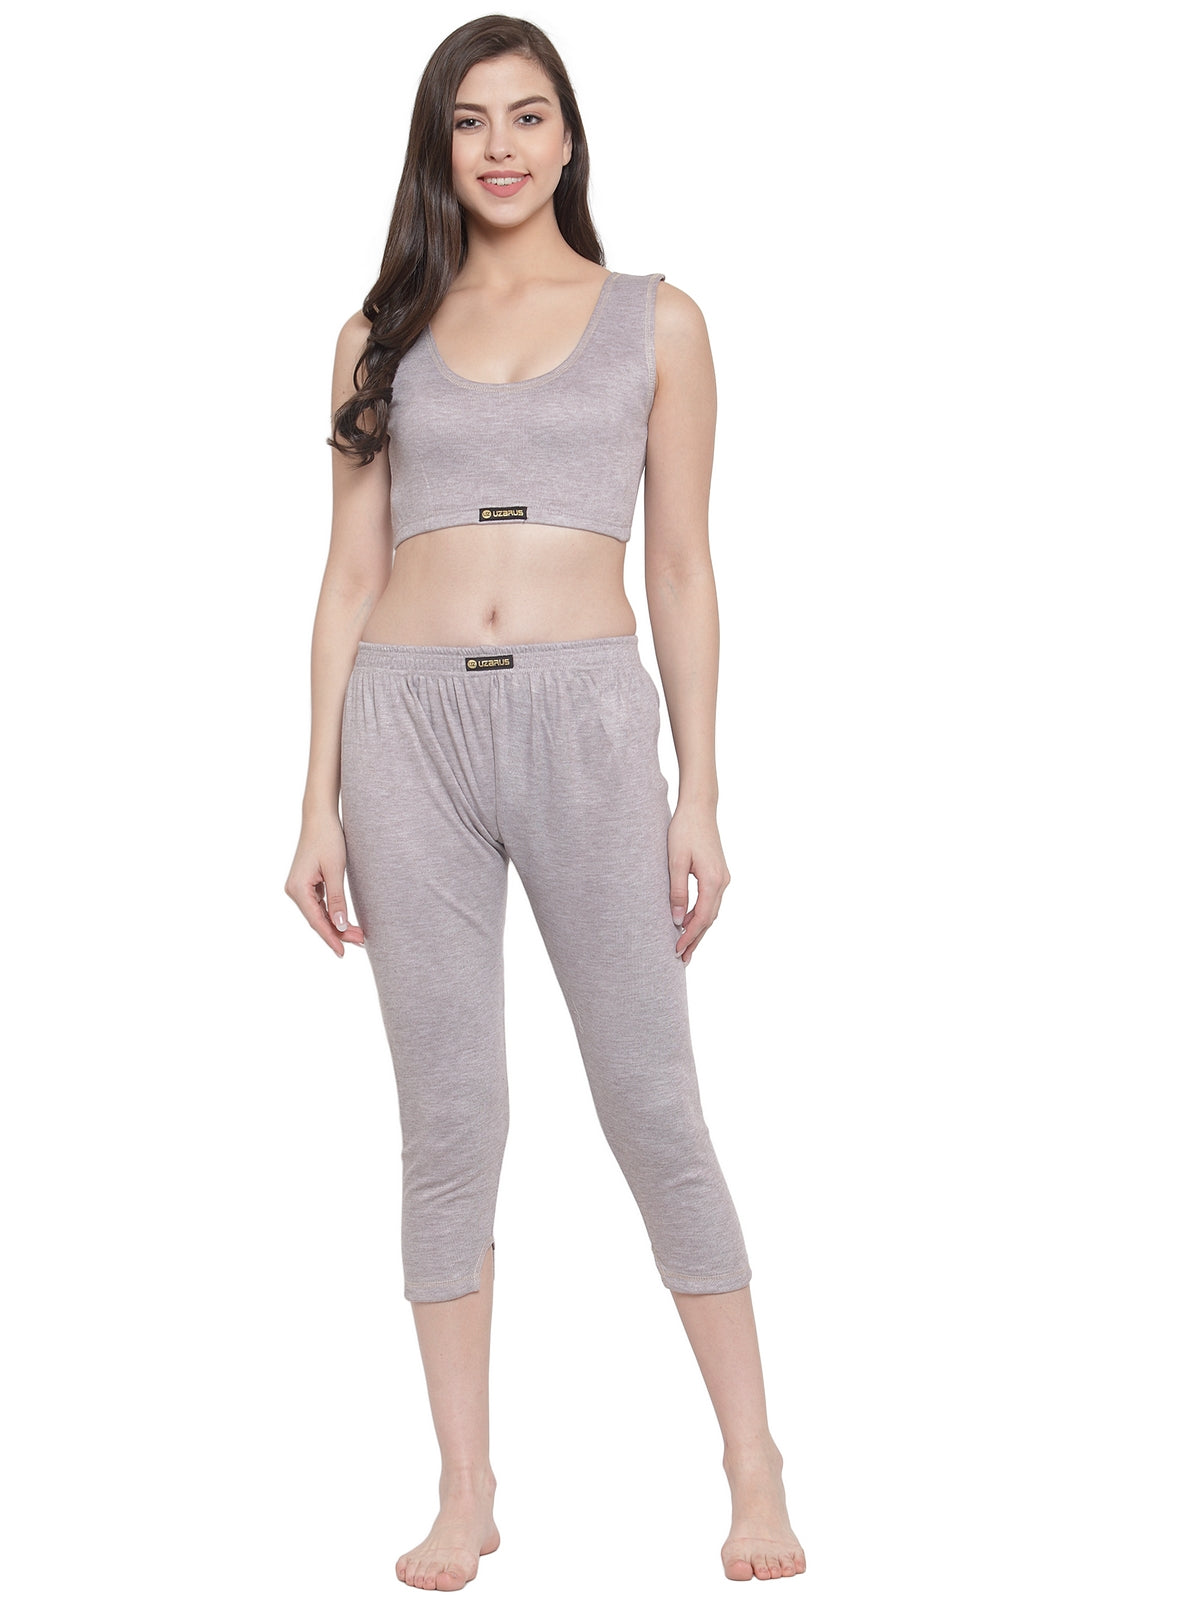 Buy Wonder Star Women's Thermal Inner wear: Sleeveless 2 Top